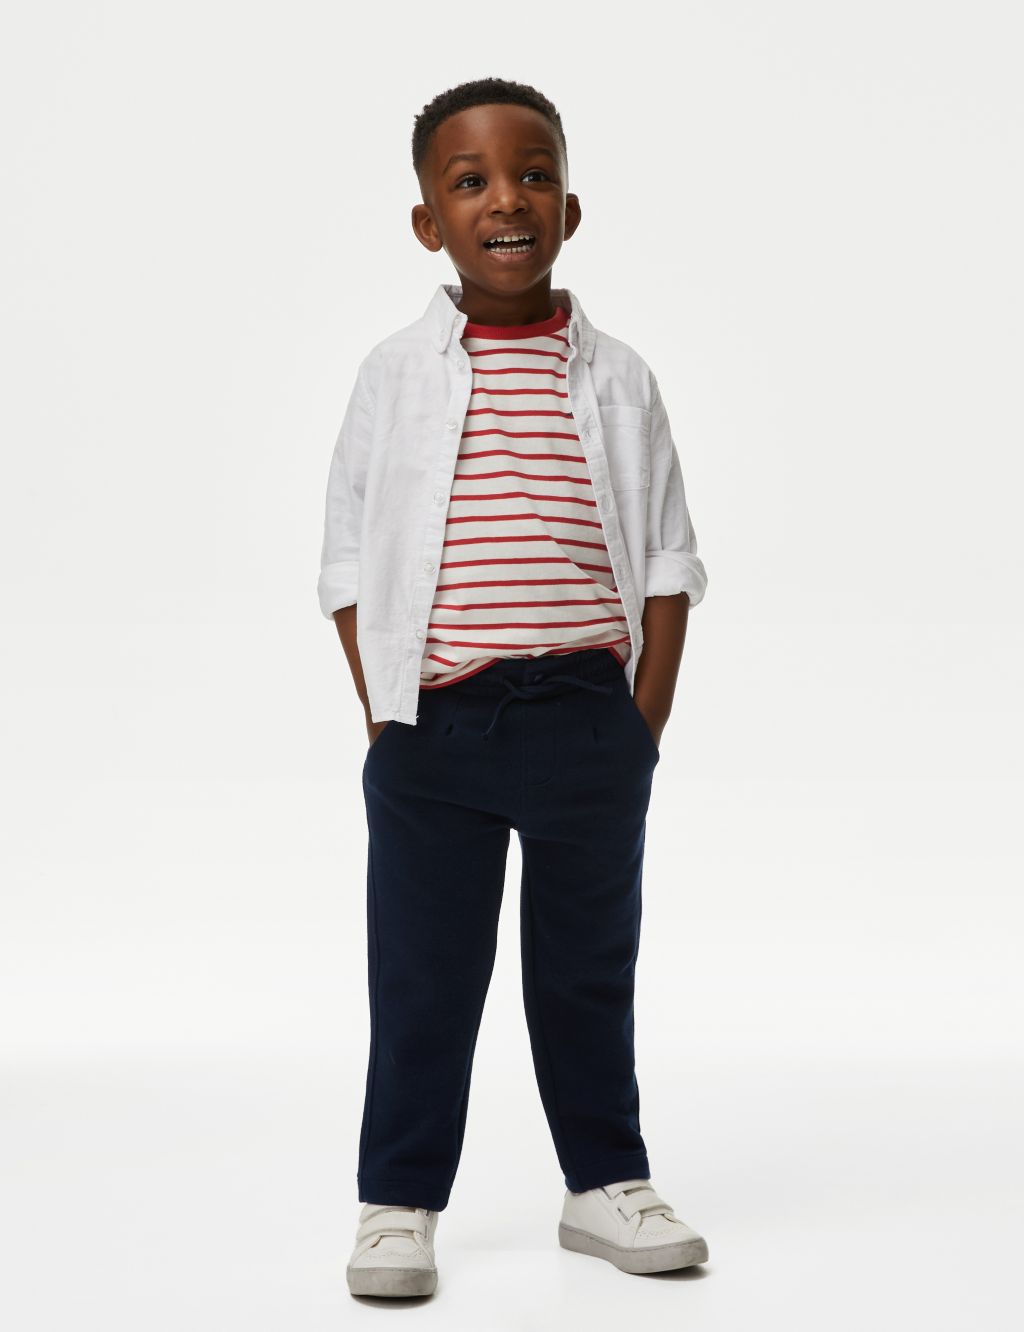 DKNY Boys’ Sweatpants – 2 Pack Basic Active Fleece Jogger Pants (Size:  8-16) : : Clothing, Shoes & Accessories